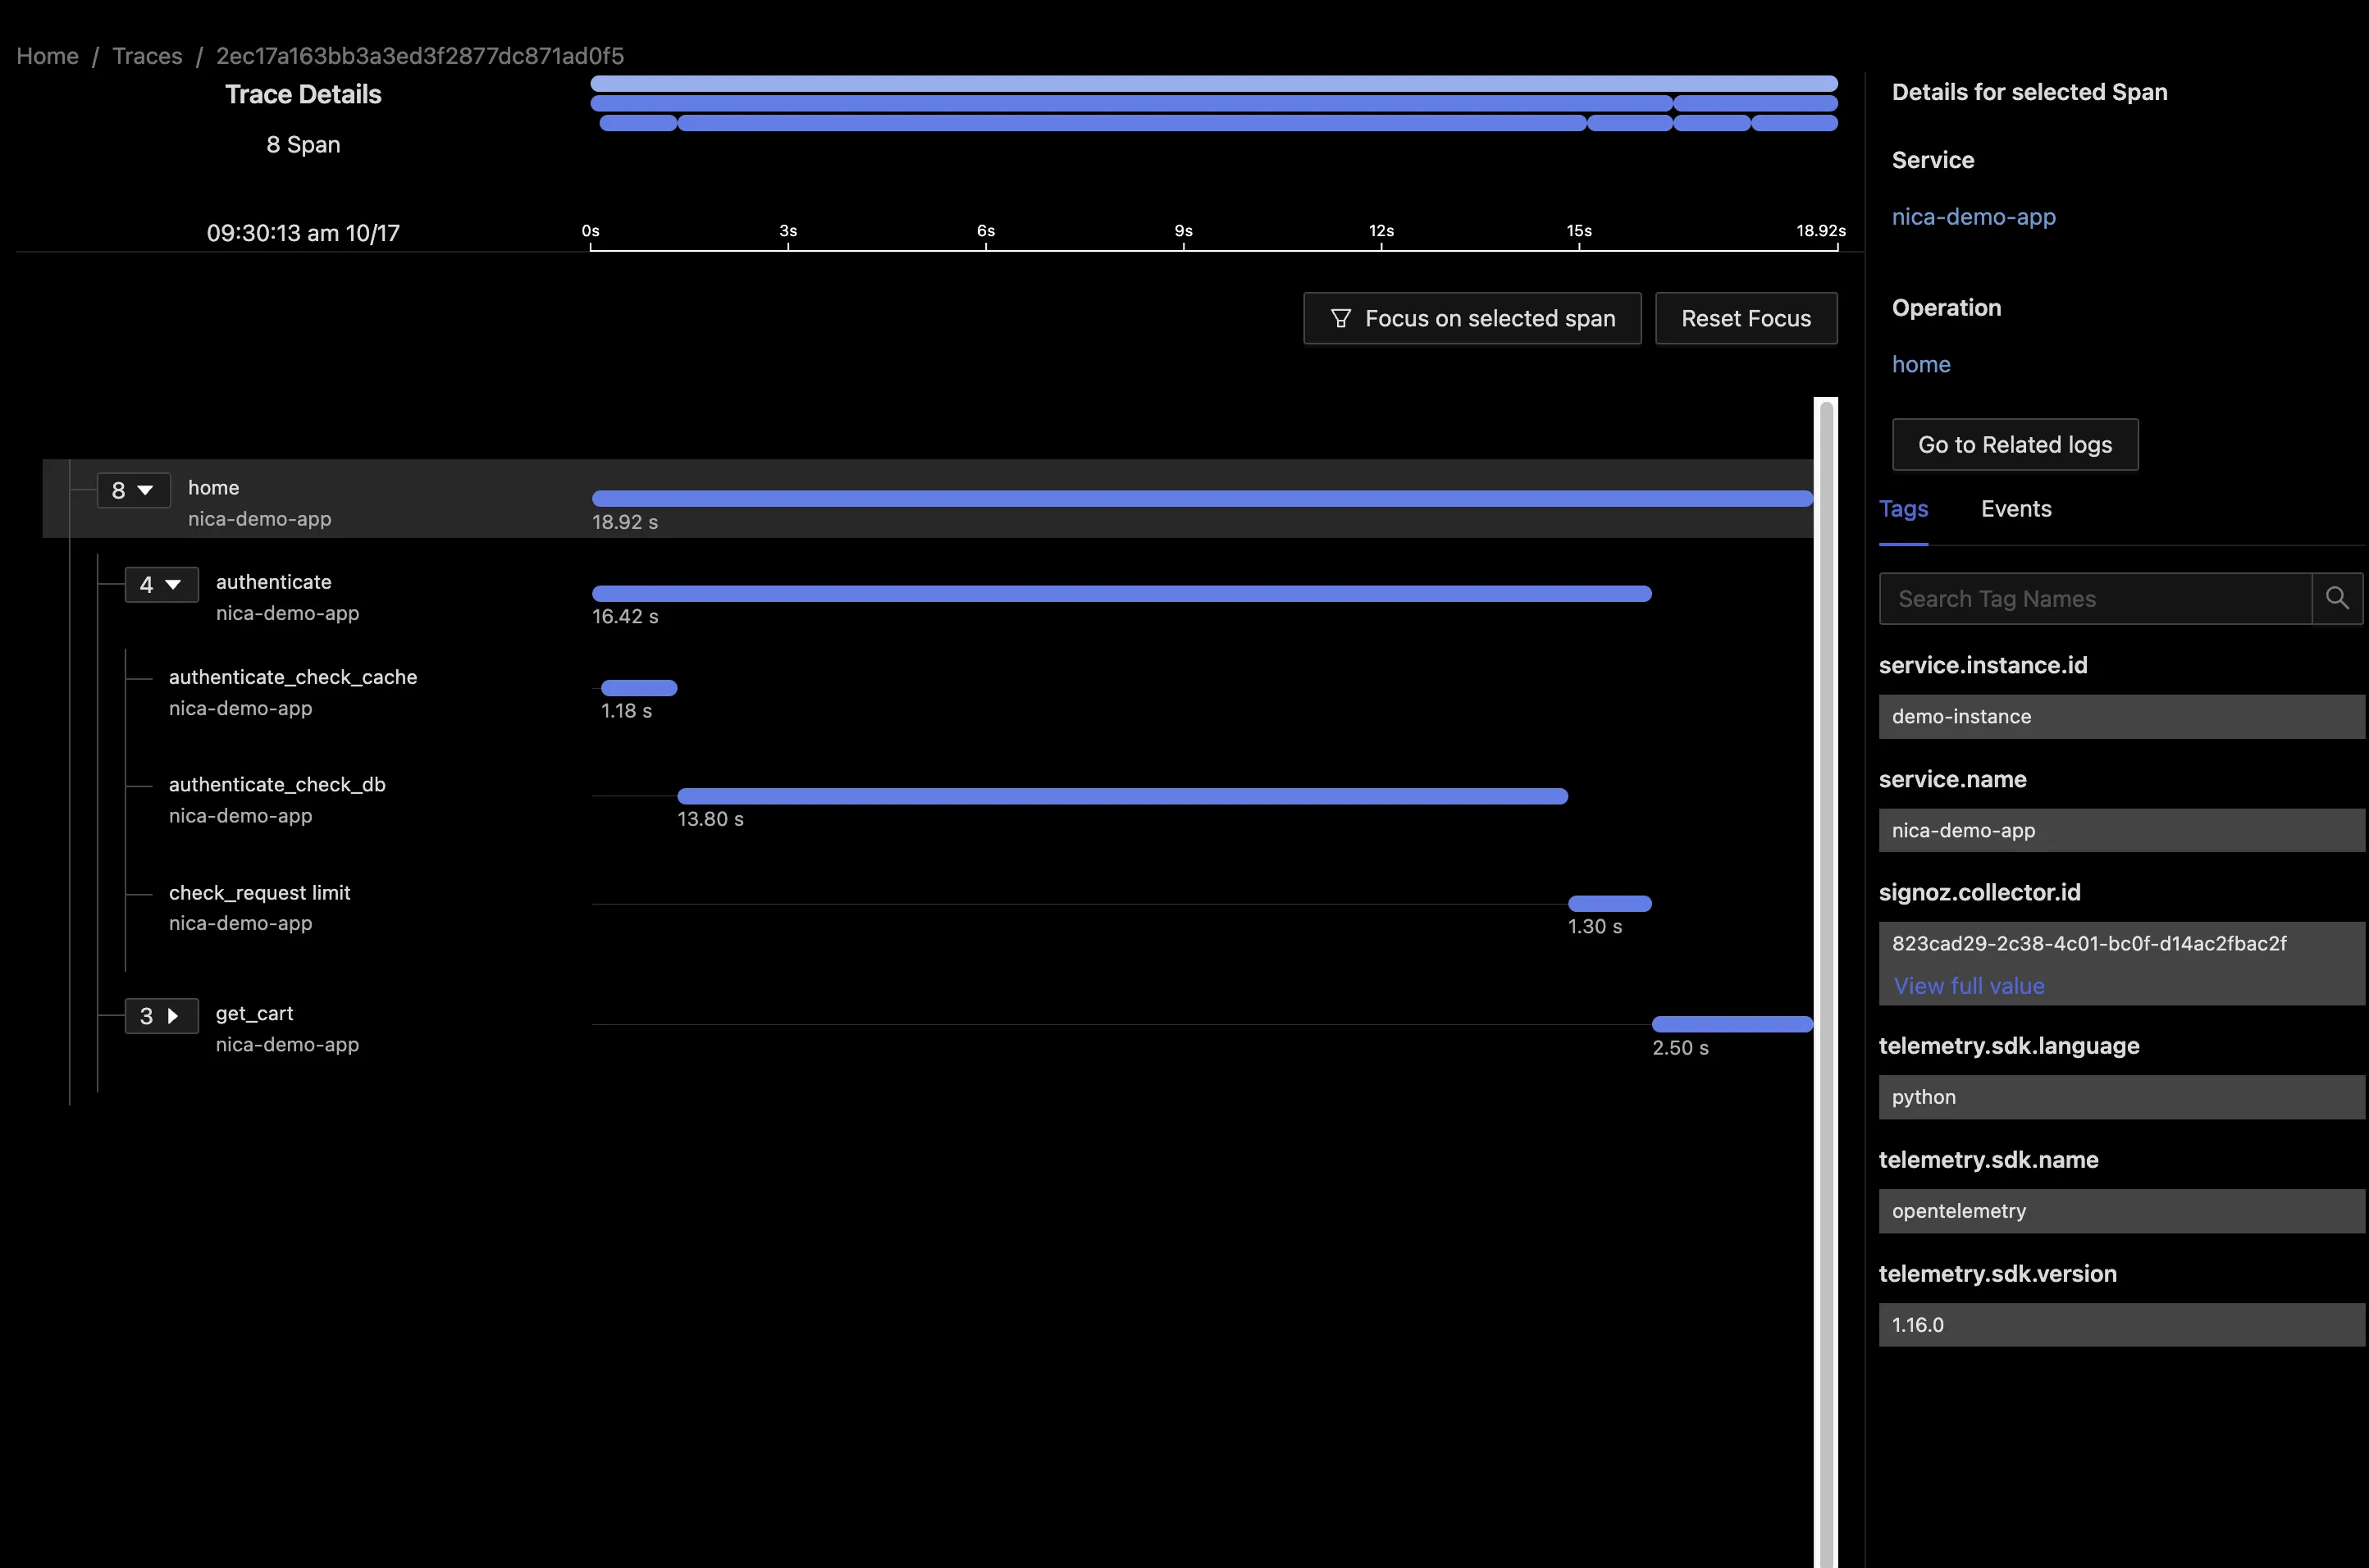 a screenshot of the SigNoz top level dashboard